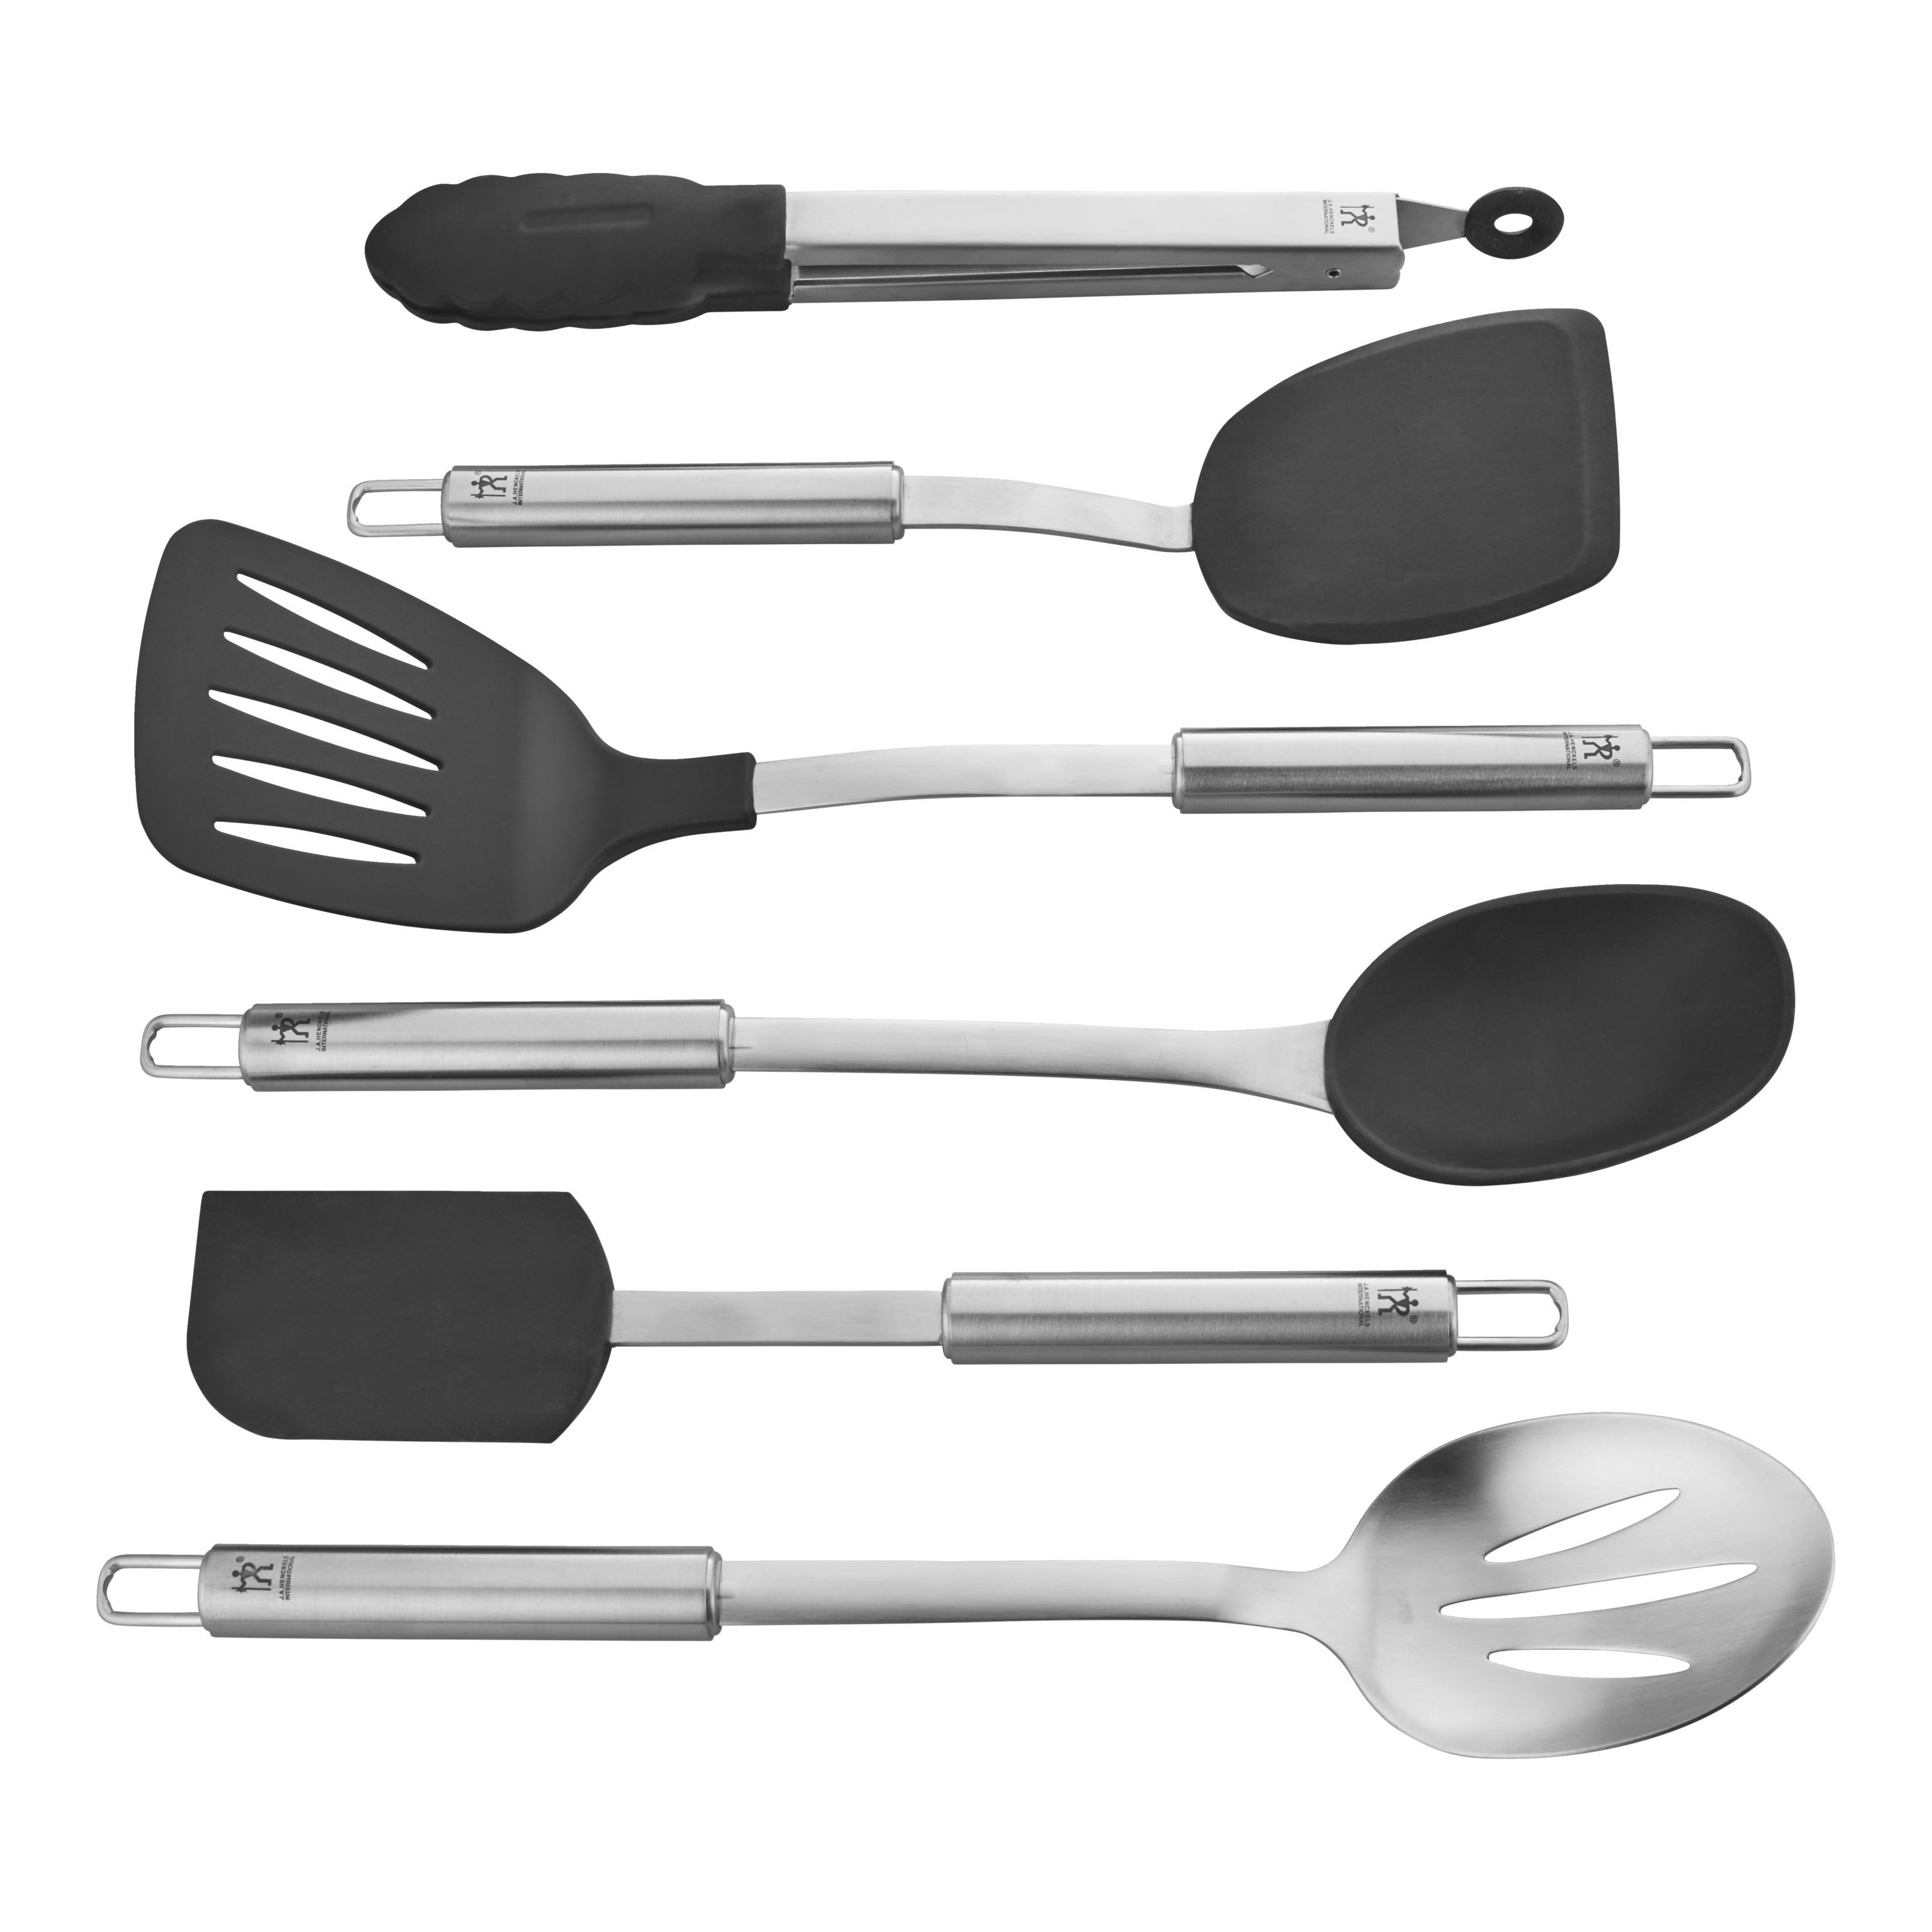 10 Silicone Cooking Utensils Set Kitchen Cutlery Non-stick Spatula Turner Gadget